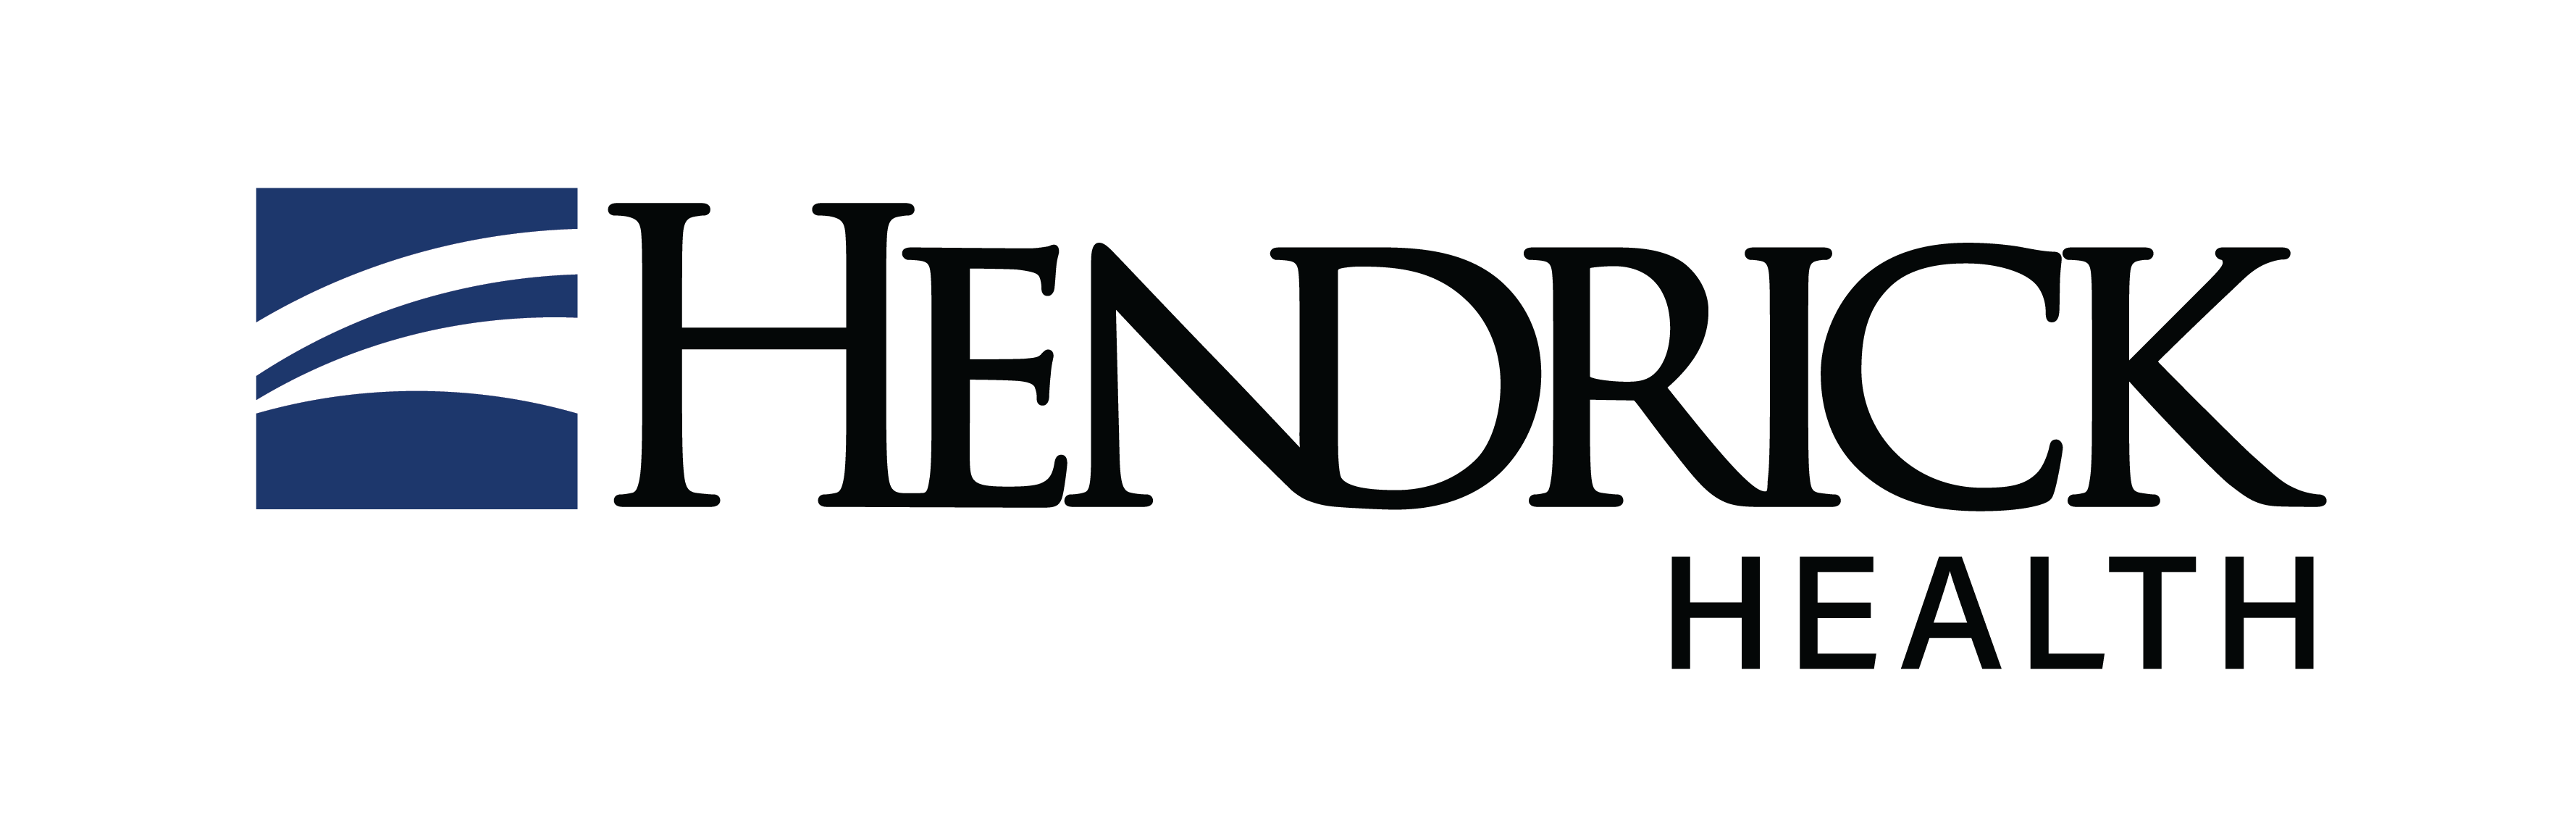 Hendrick Medical Plaza logo